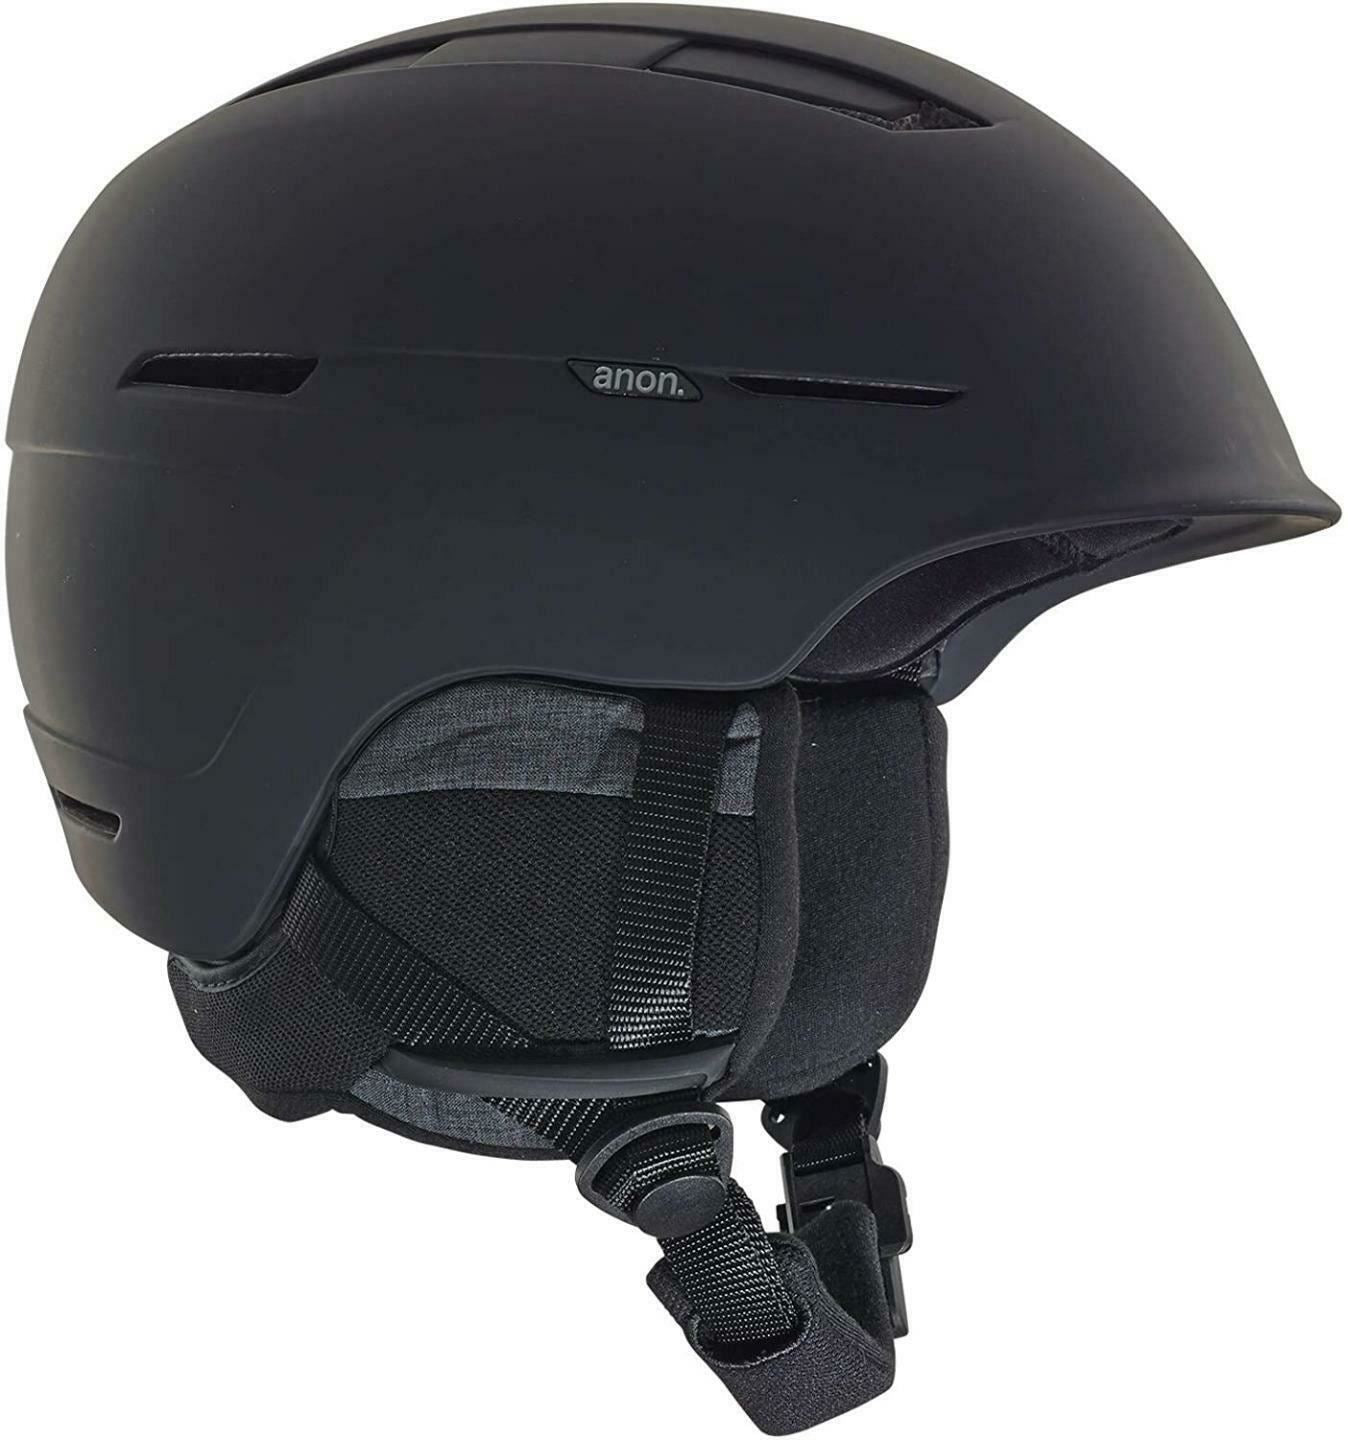 $150 Burton Anon Invert S Small 52-55cm Ski Snowboard Black Helmet AR423 NEW